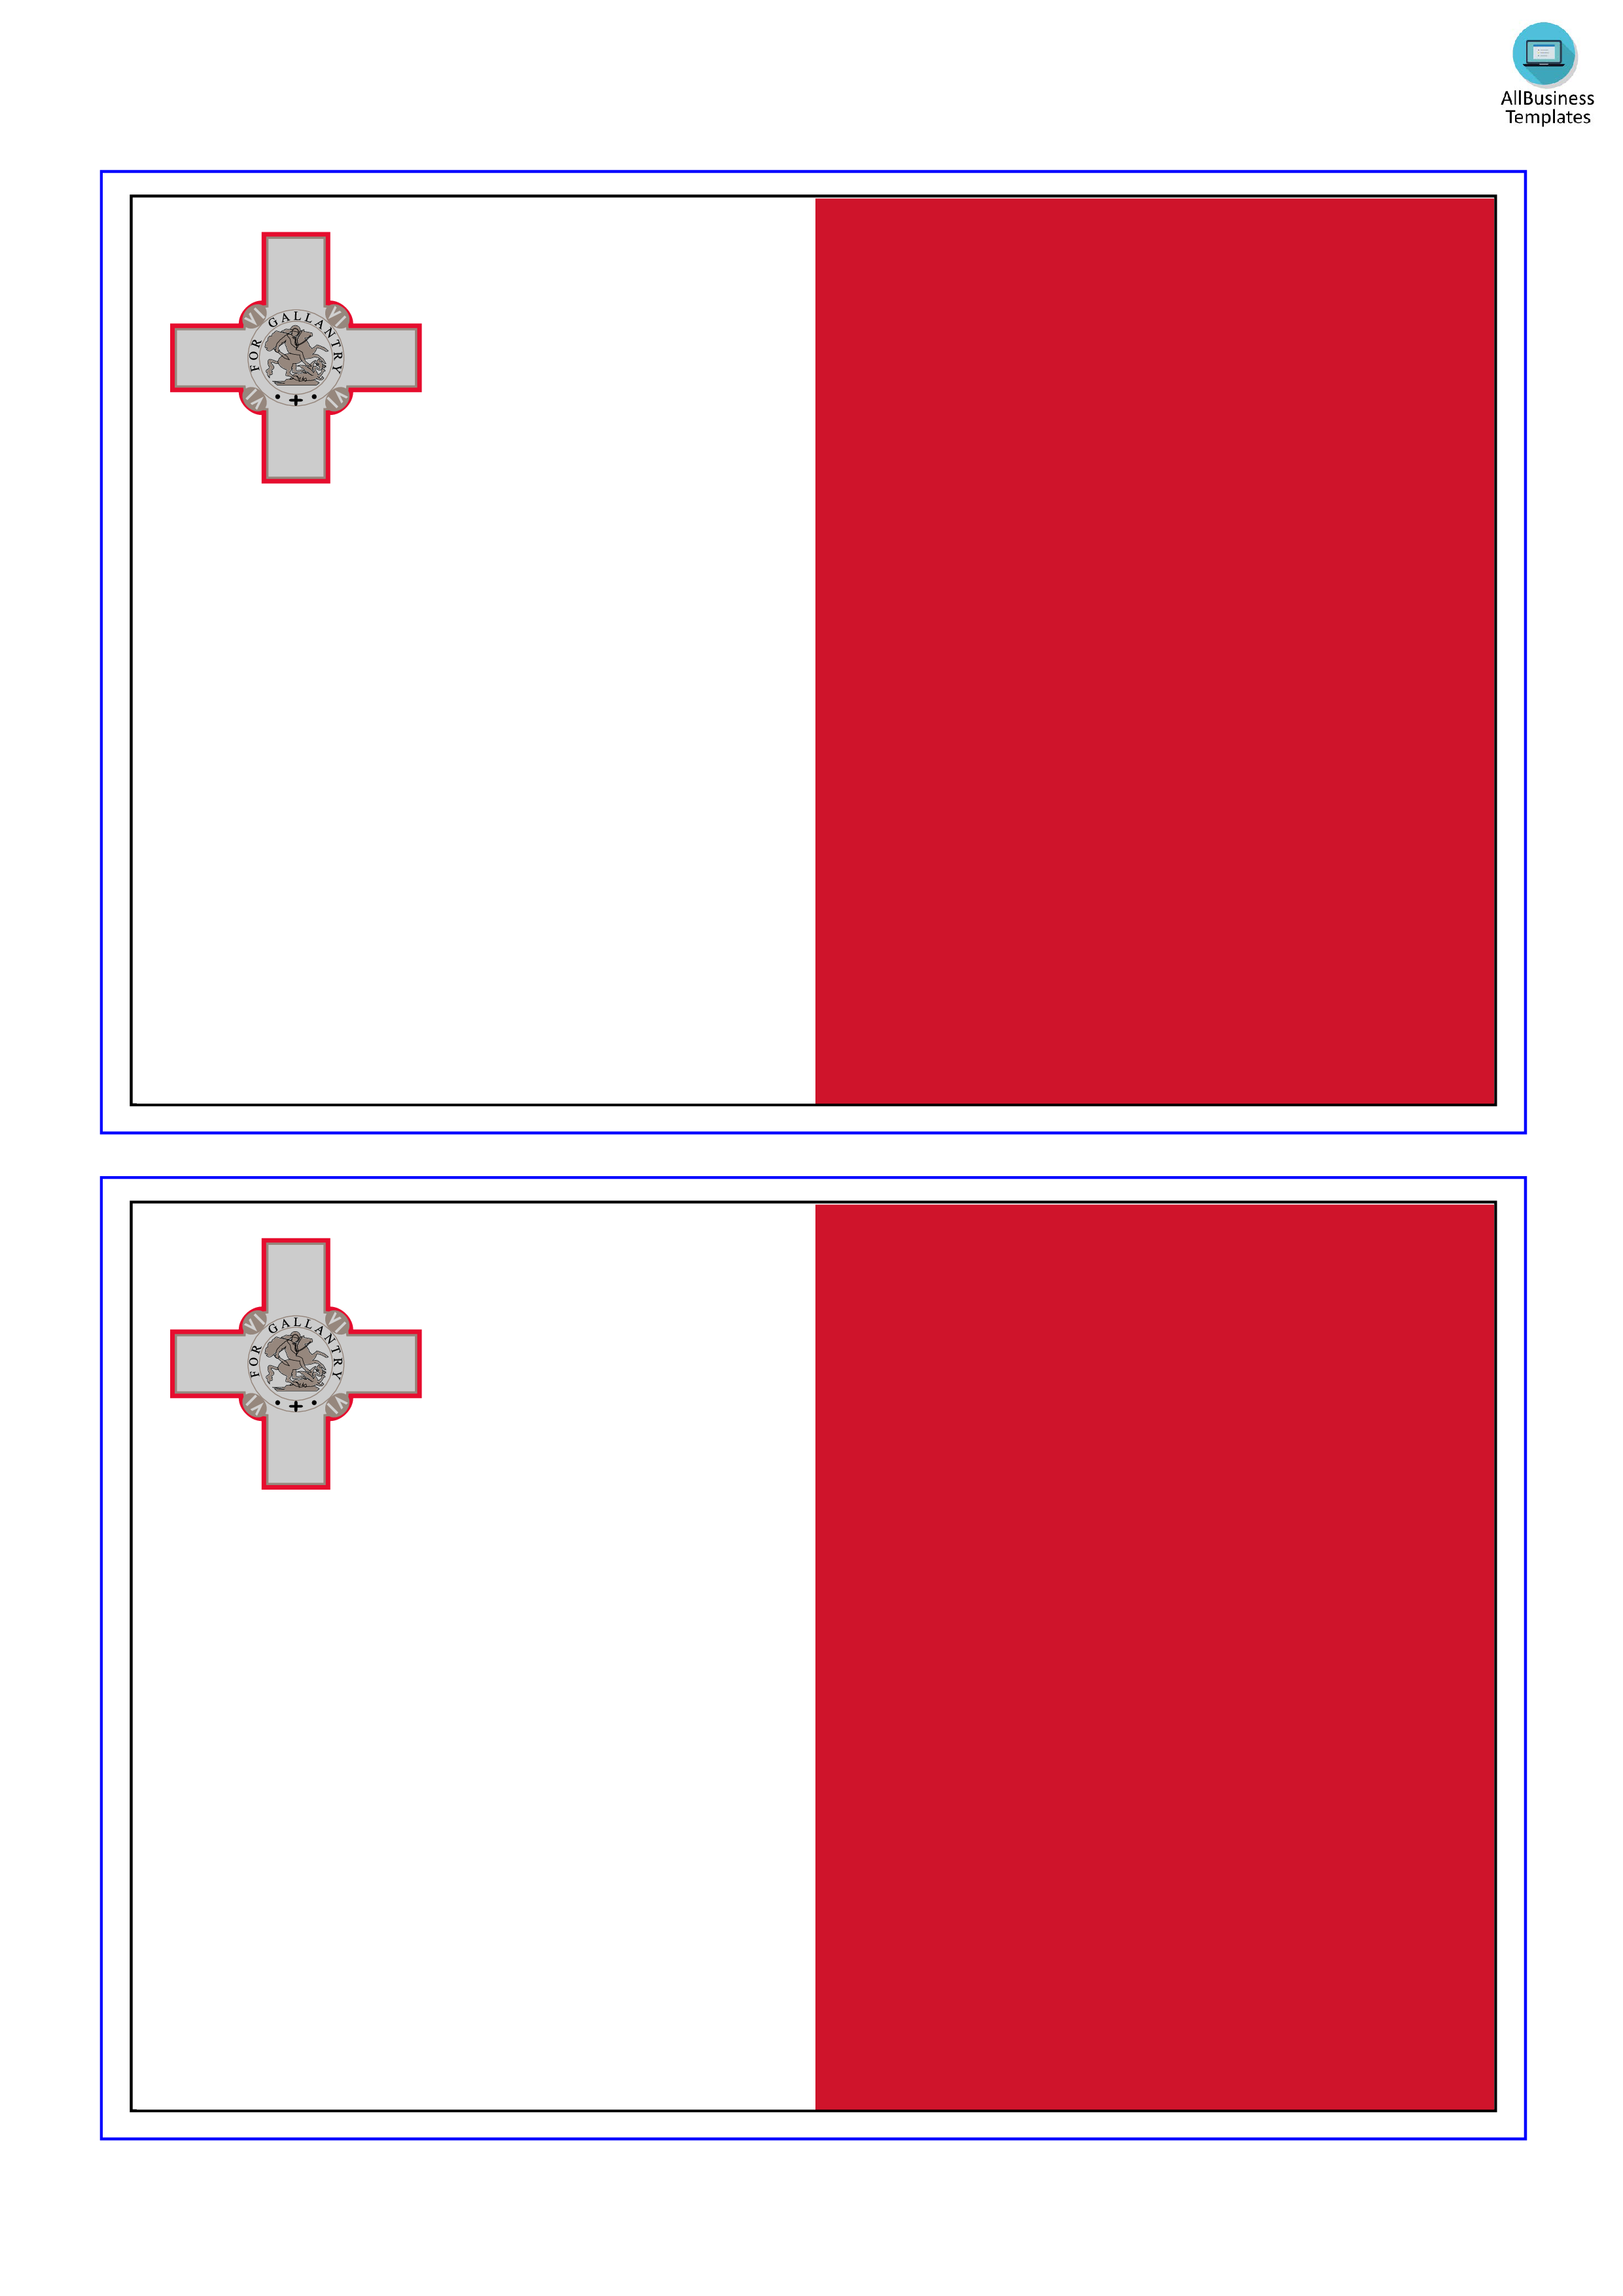 Malta Flag main image